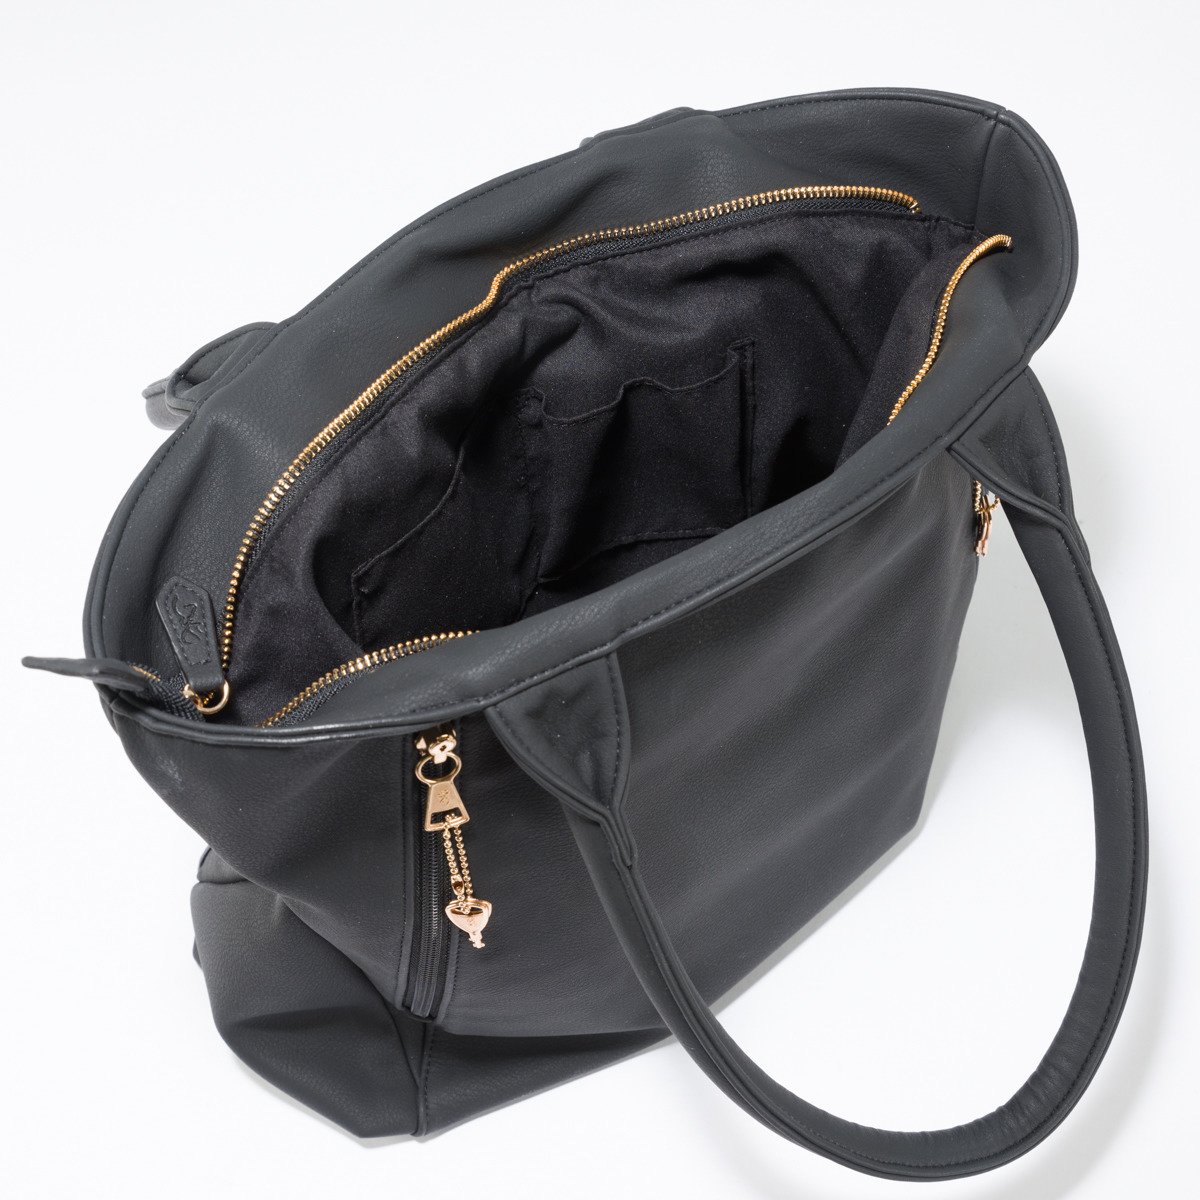 Browning Alexandria Concealed Carry Handbag | Academy